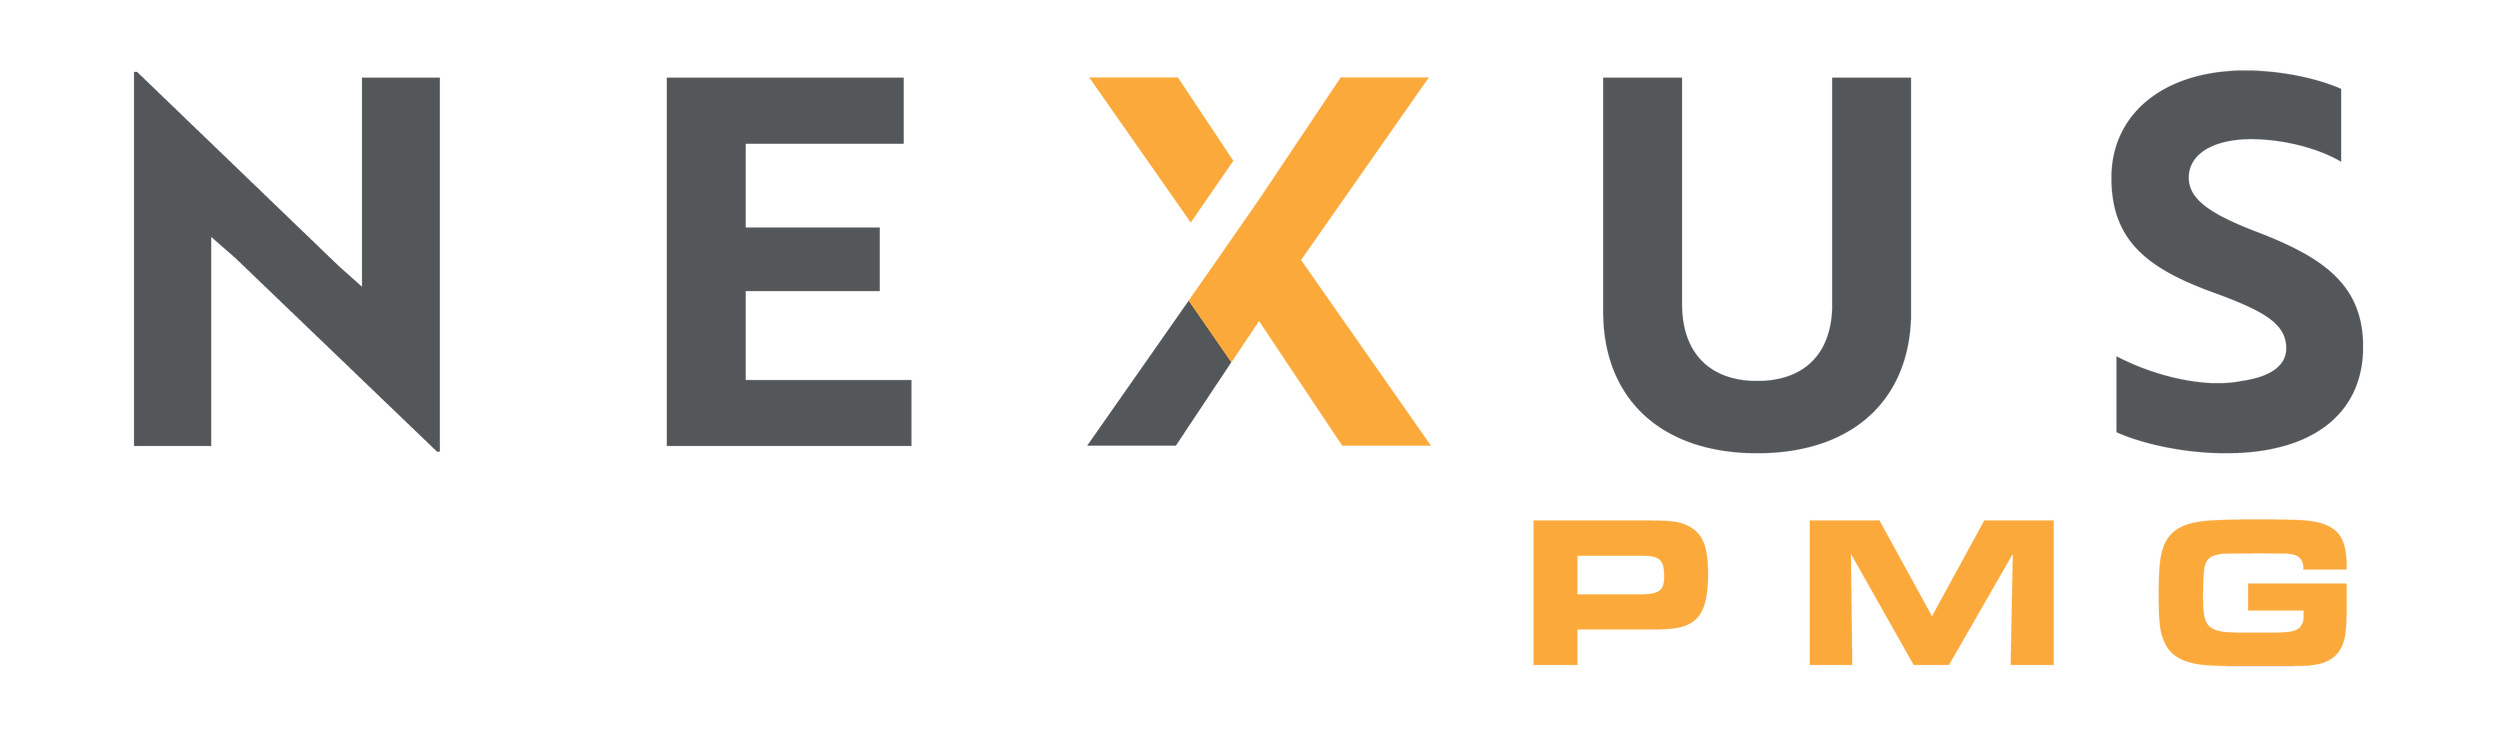 Nexus PMG_RGB_Small Logo.png